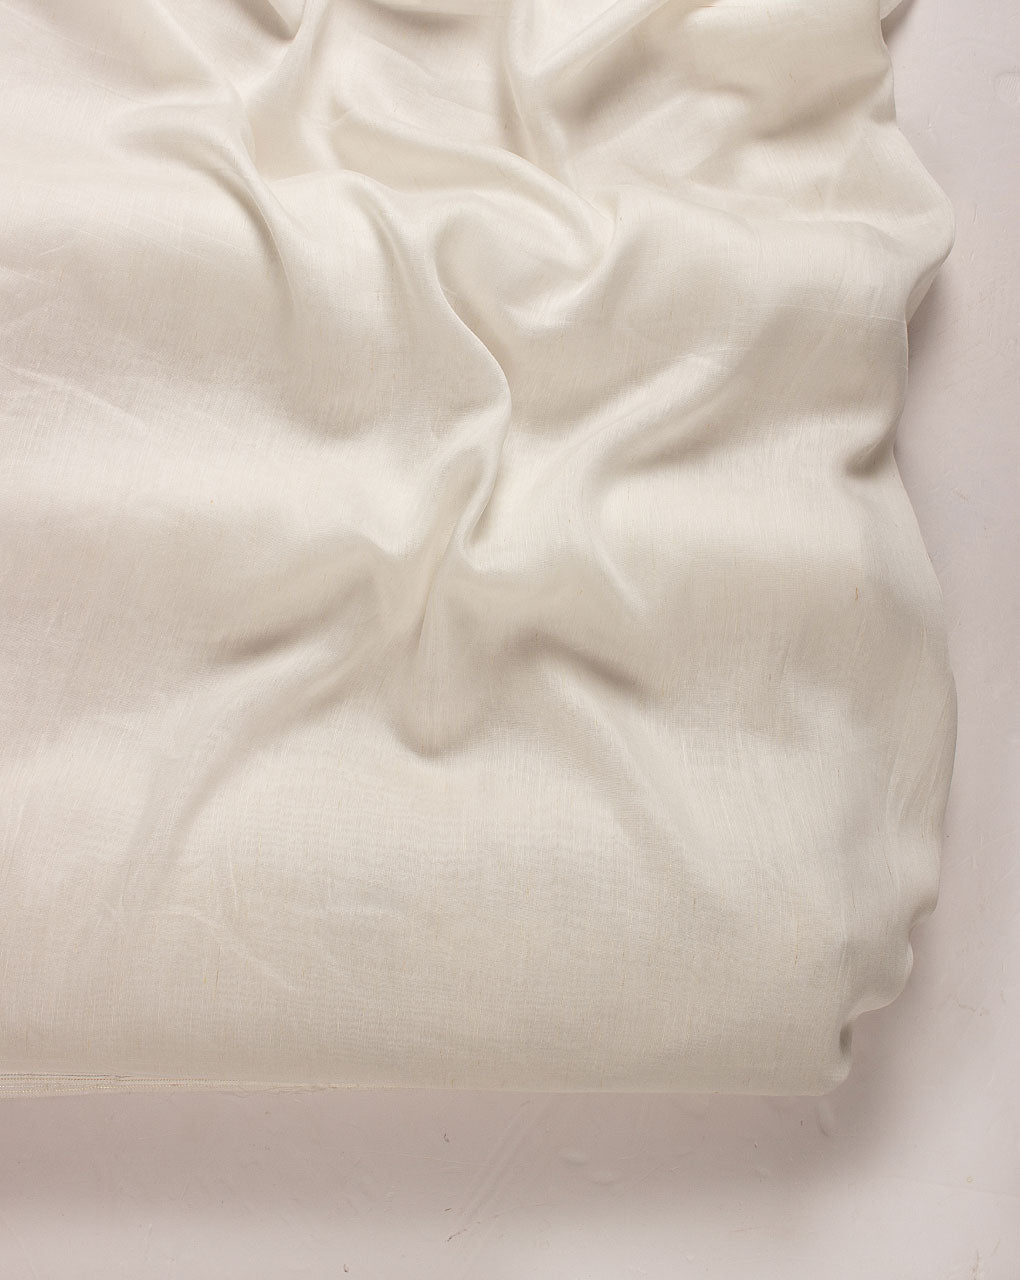 Dyeable Liva Bemberg Excel Linen ( Linen Malmari ) Fabric - Fabriclore.com